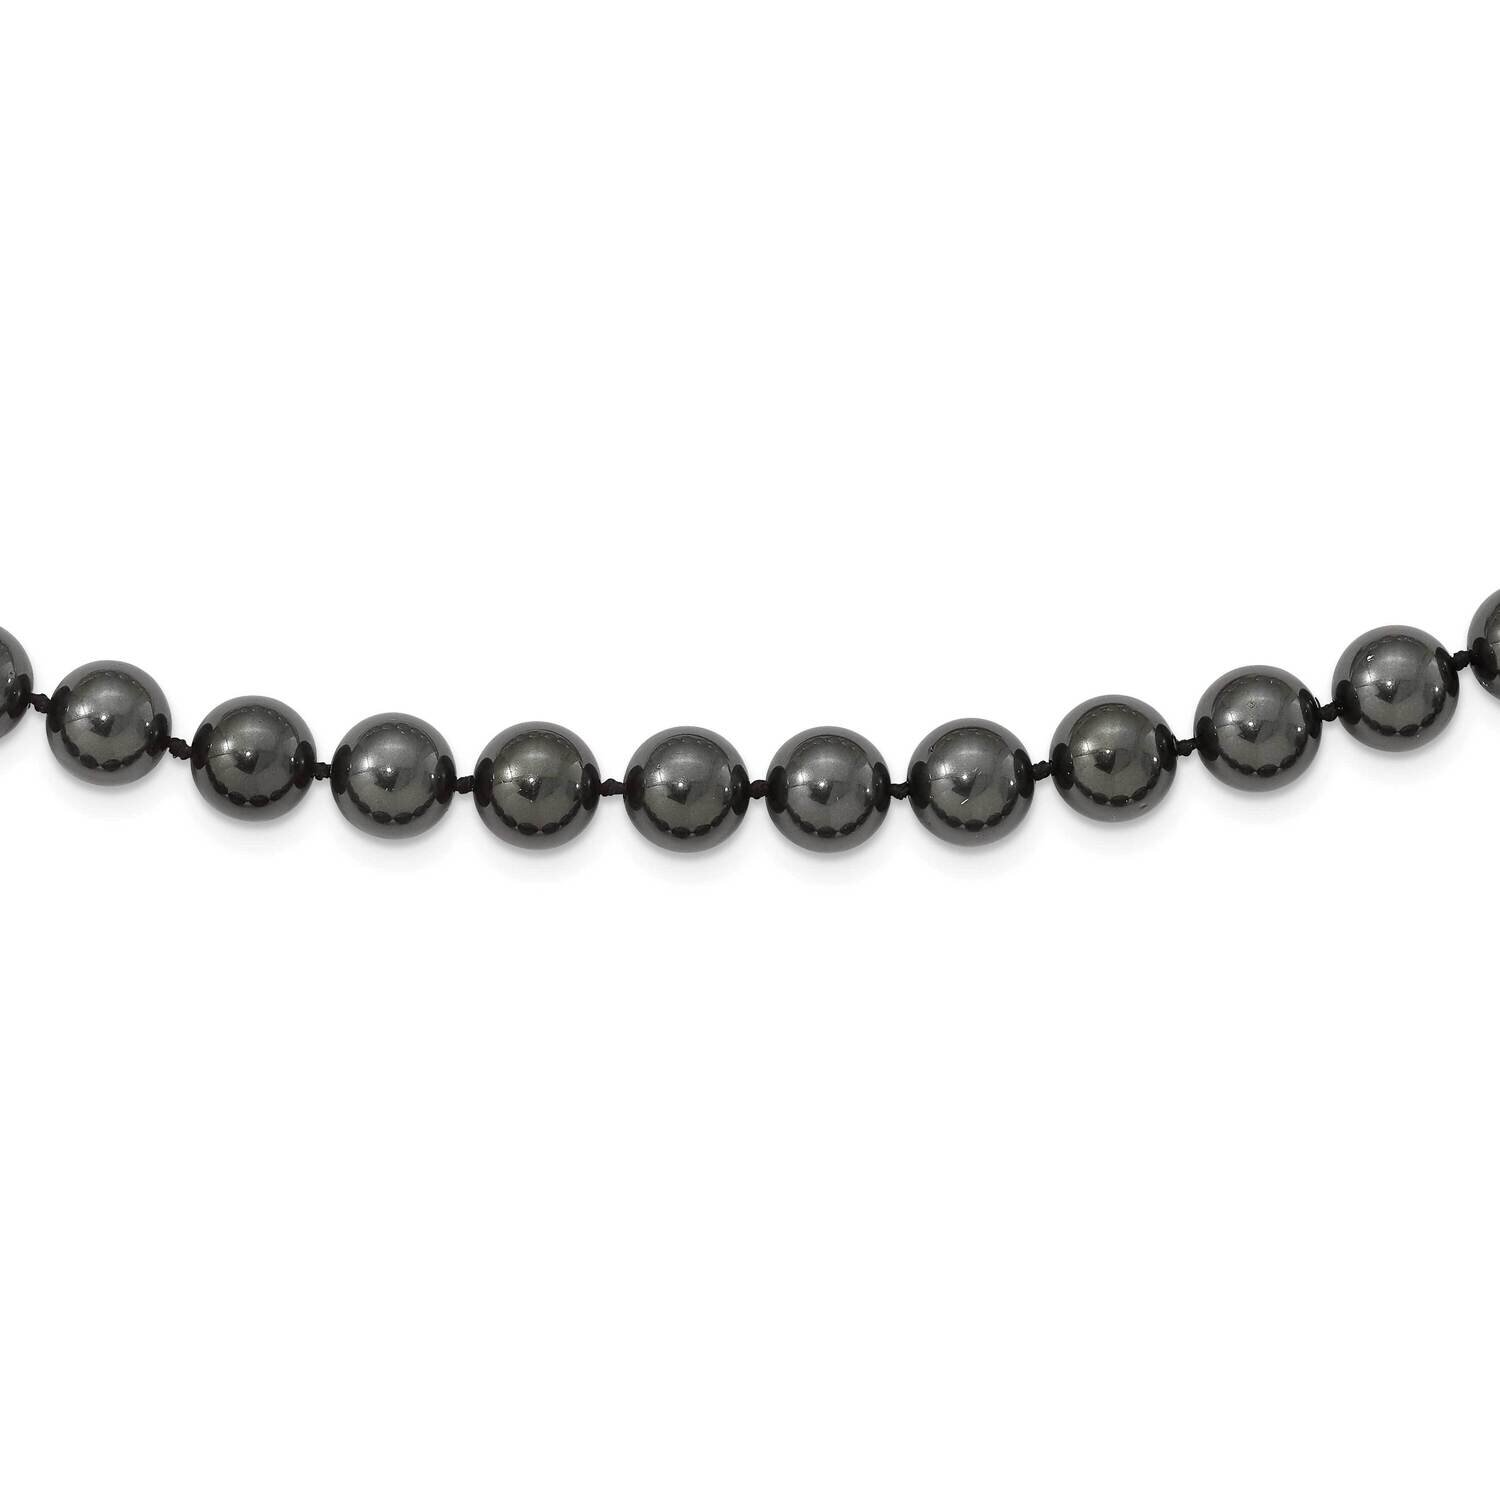 Majestik 10-11mm Black Imitat Shell Pearl Necklace Sterling Silver Rhodium-plated QMJN10B-24